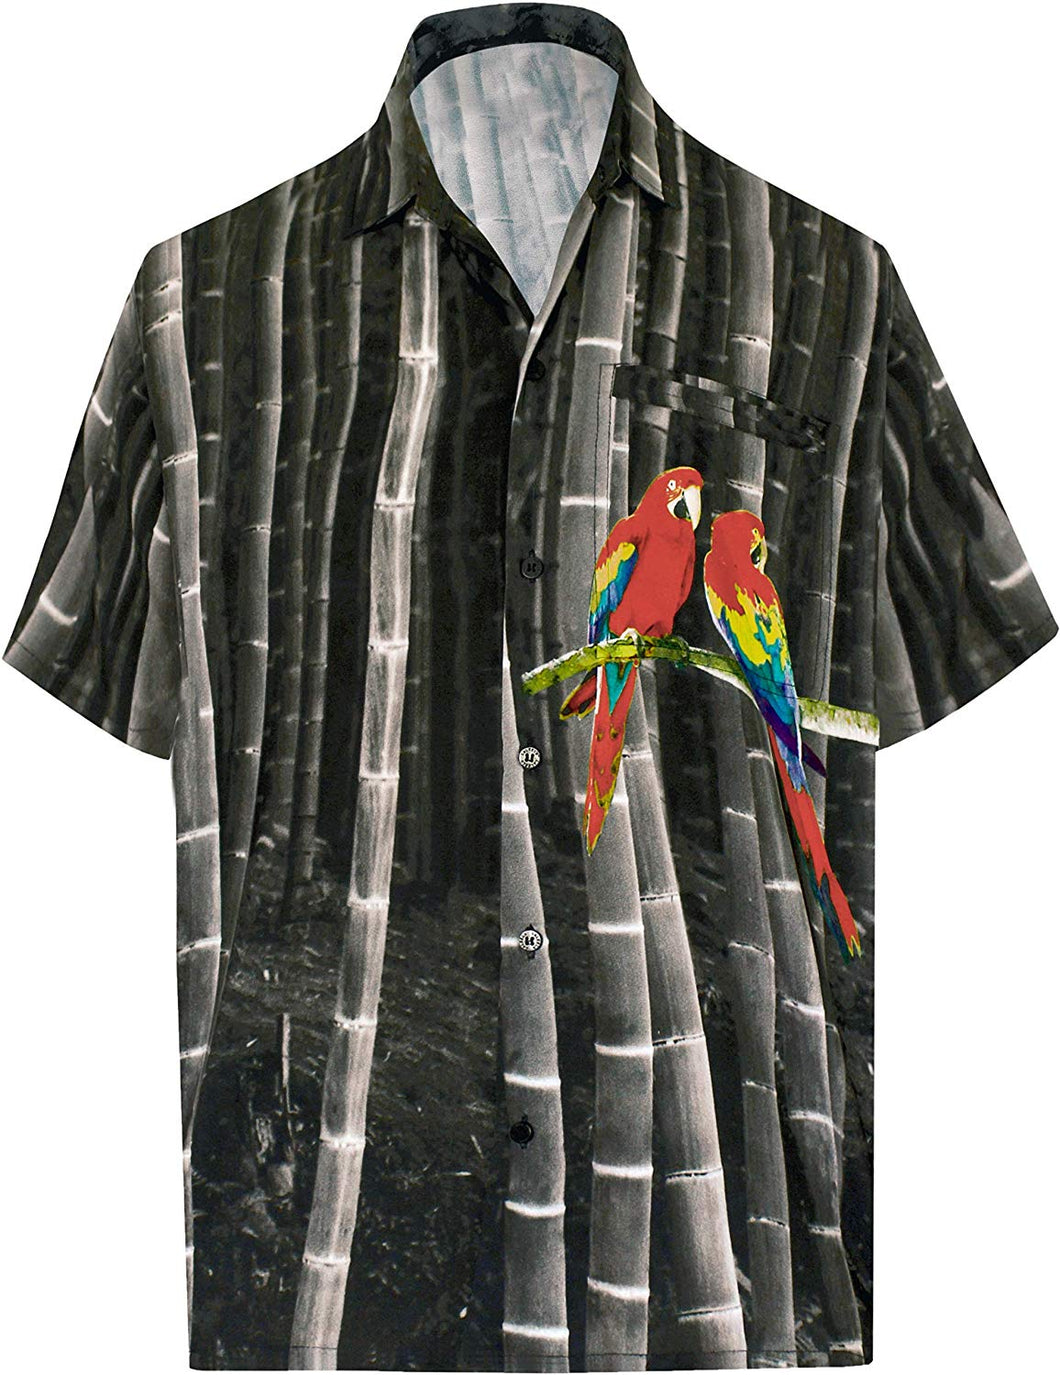 LA LEELA Shirt Casual Button Down Short Sleeve Beach  parrot printed Shirt Men Pocket HD Black